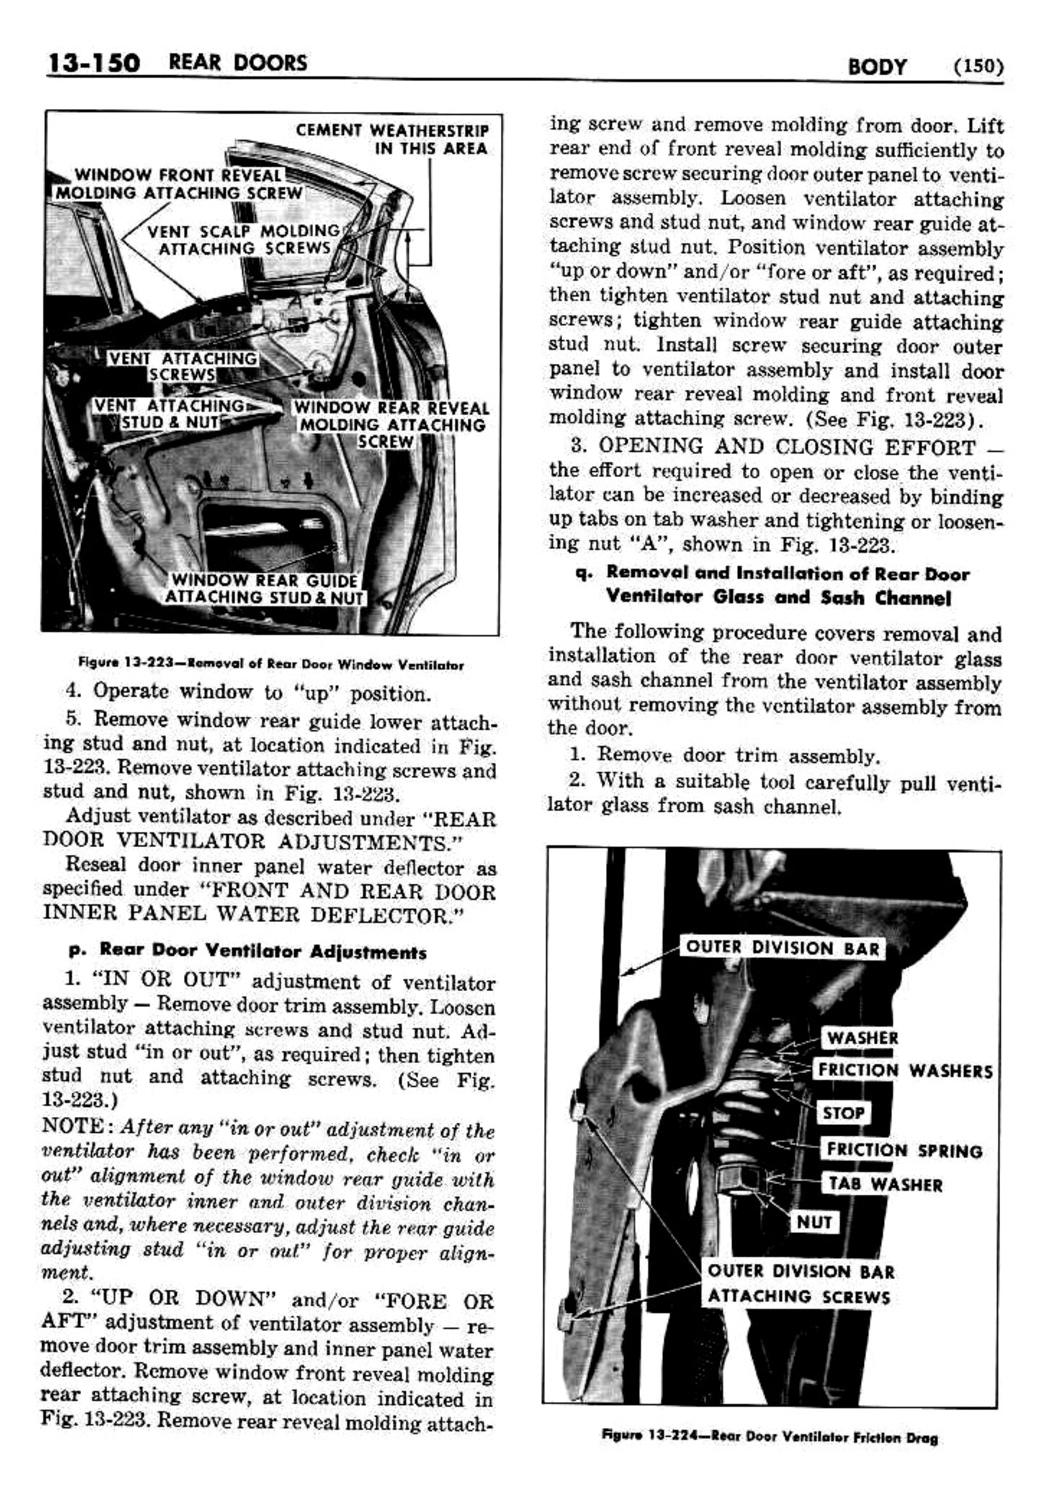 n_1958 Buick Body Service Manual-151-151.jpg